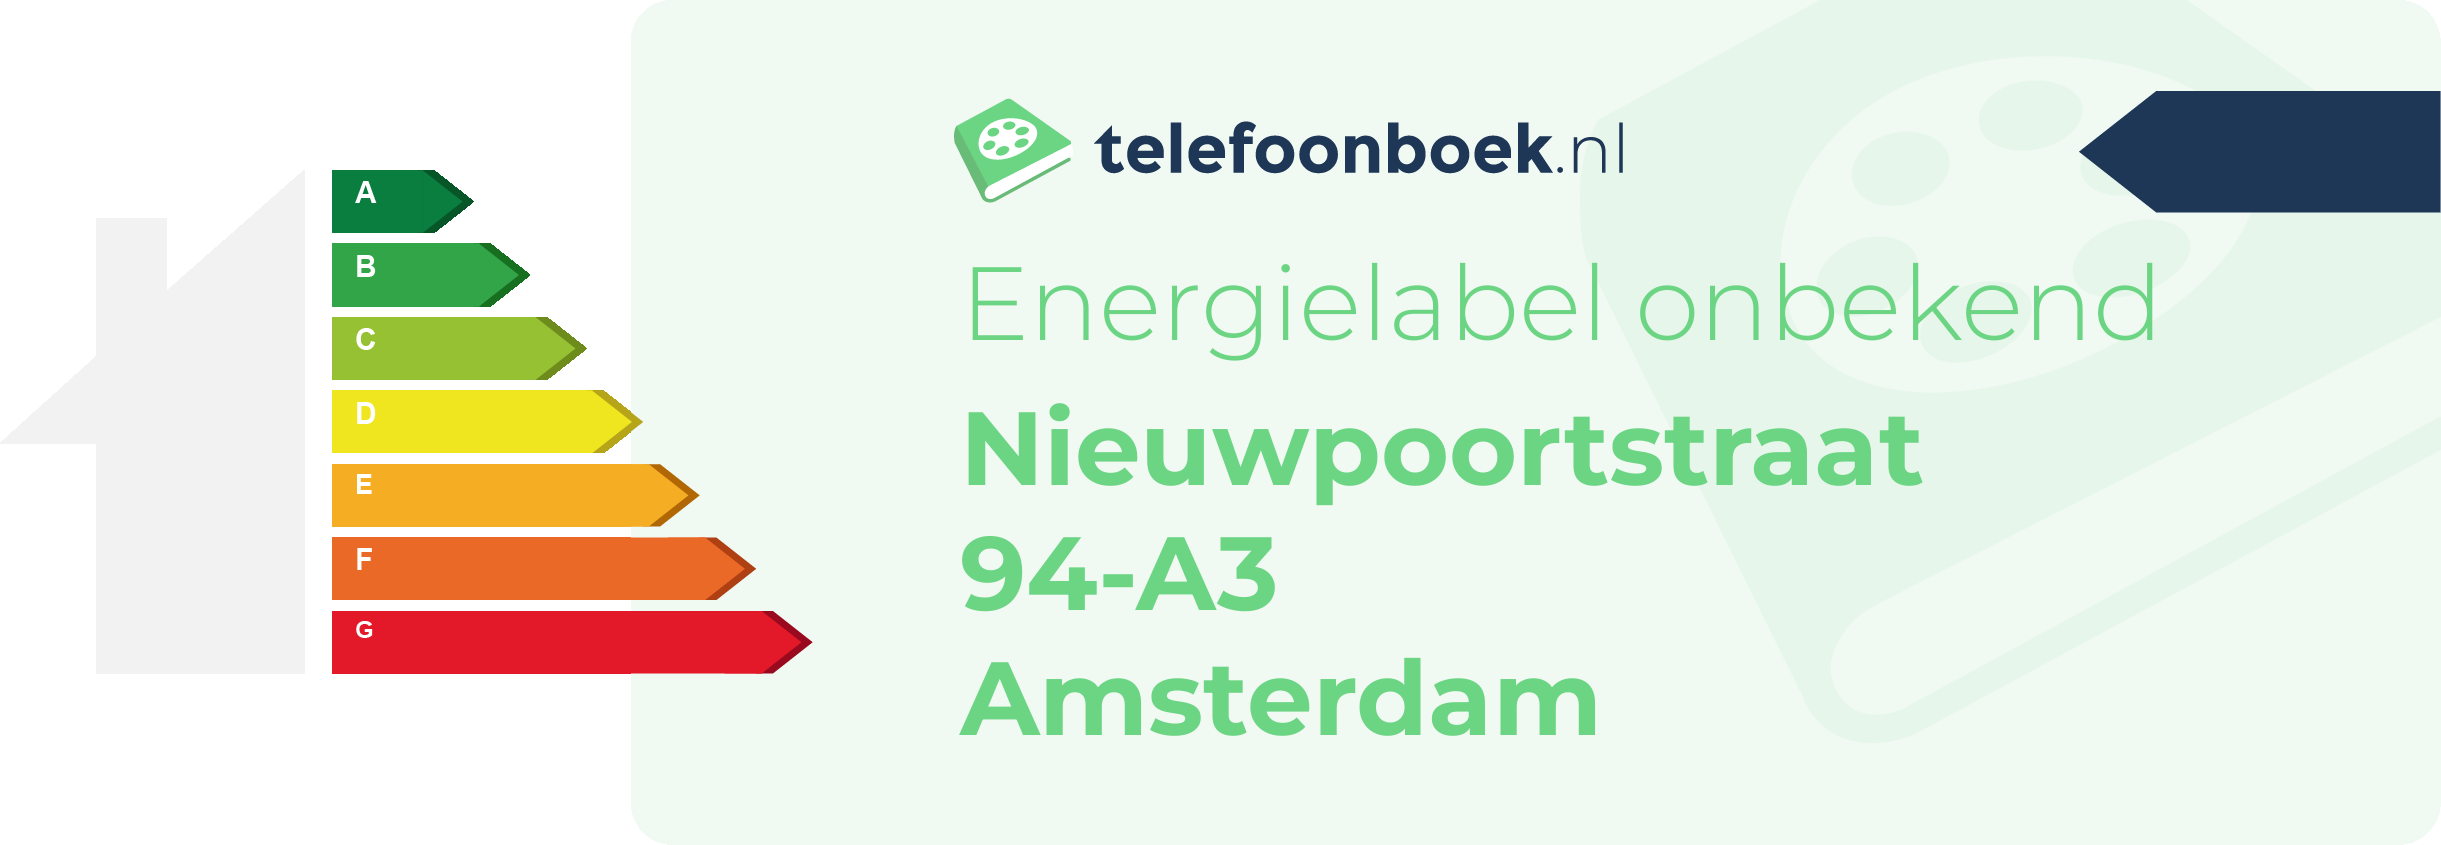 Energielabel Nieuwpoortstraat 94-A3 Amsterdam